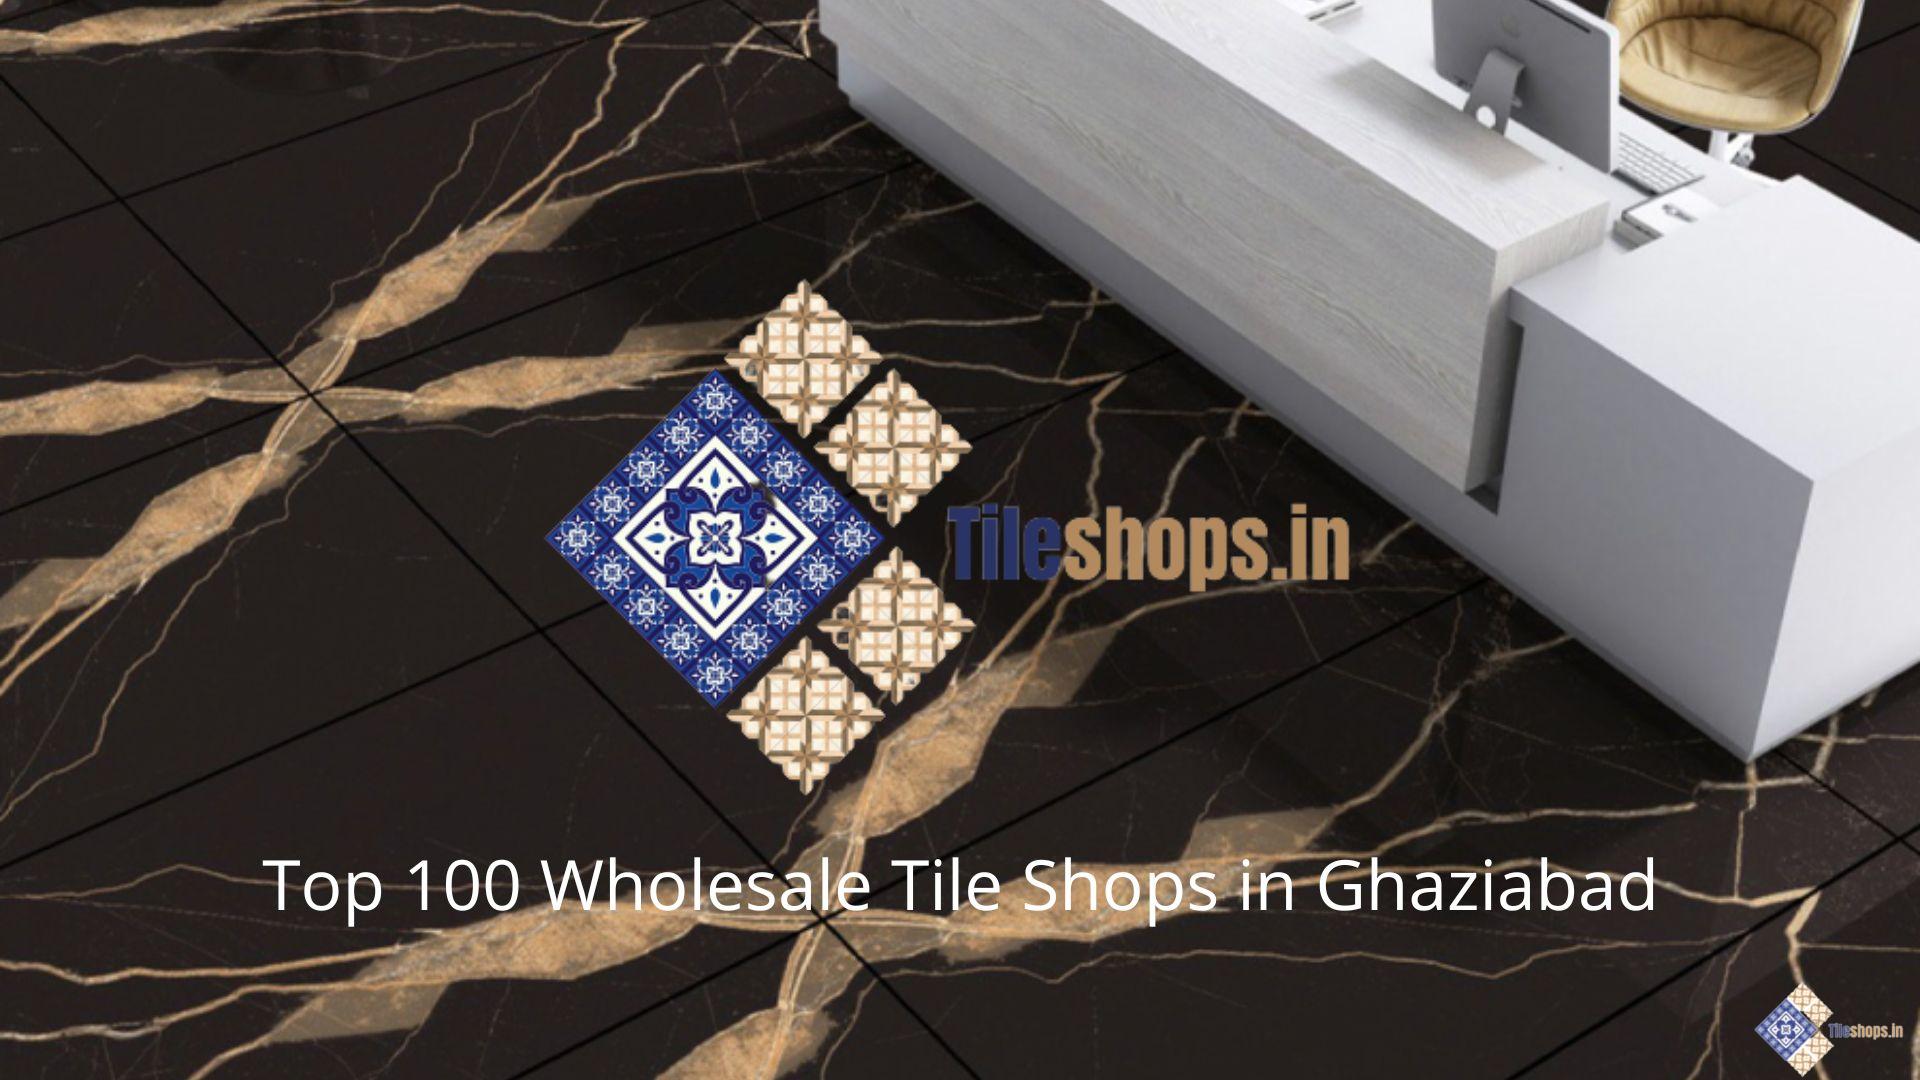 Top 100 Wholesale Tile Shops in Ghaziabad